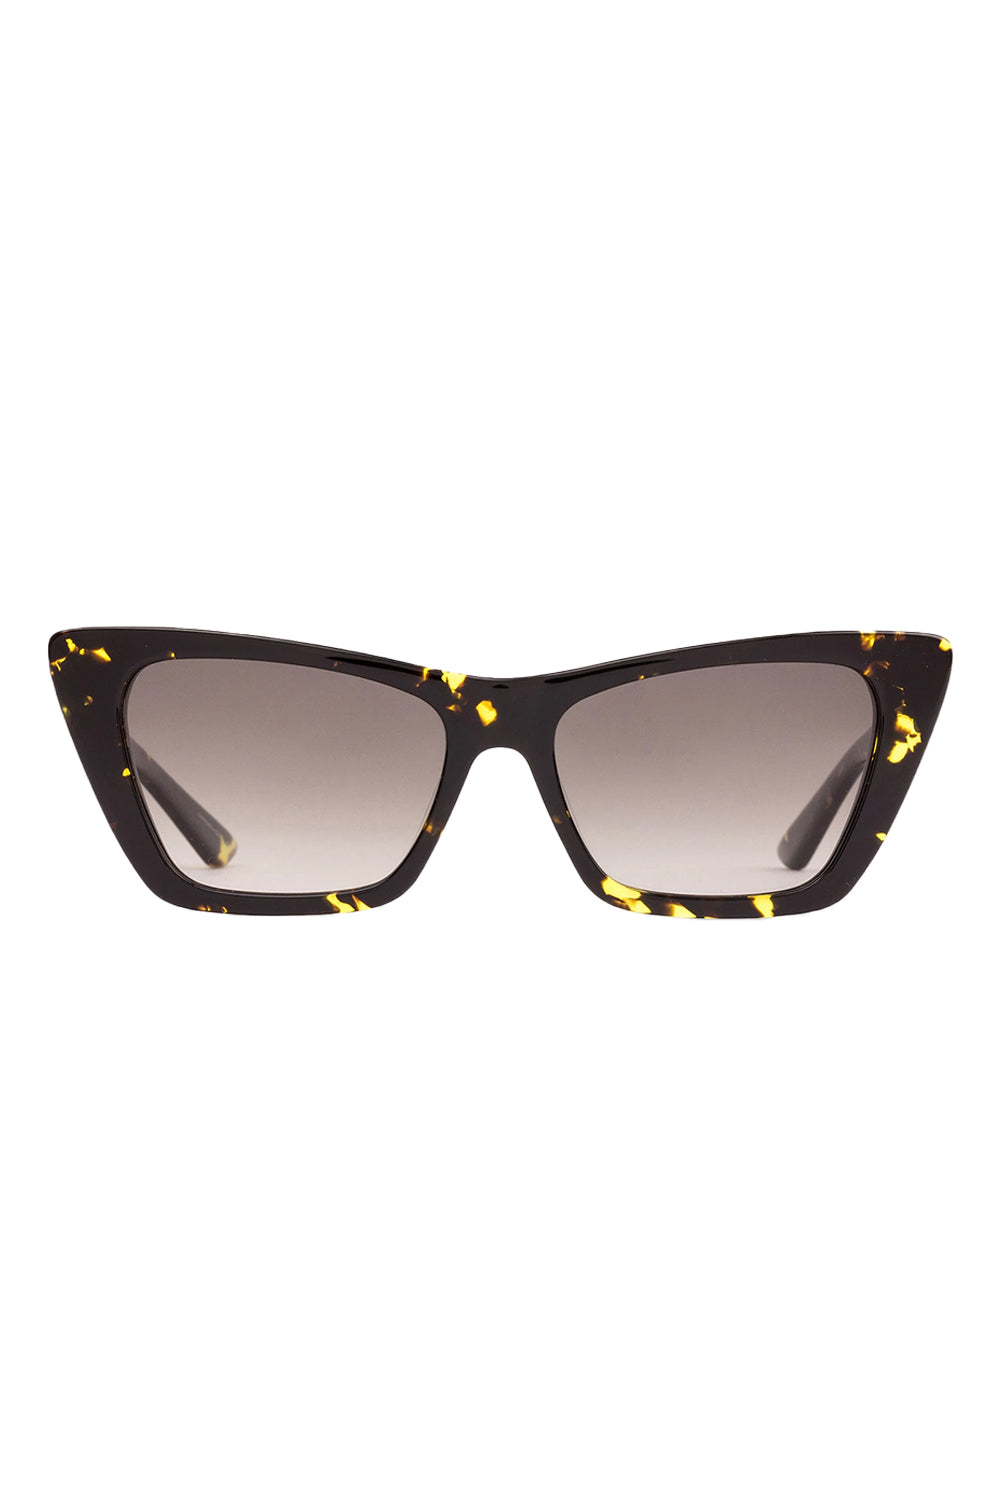 Sito Shades | Sito Wonderland Sunglasses